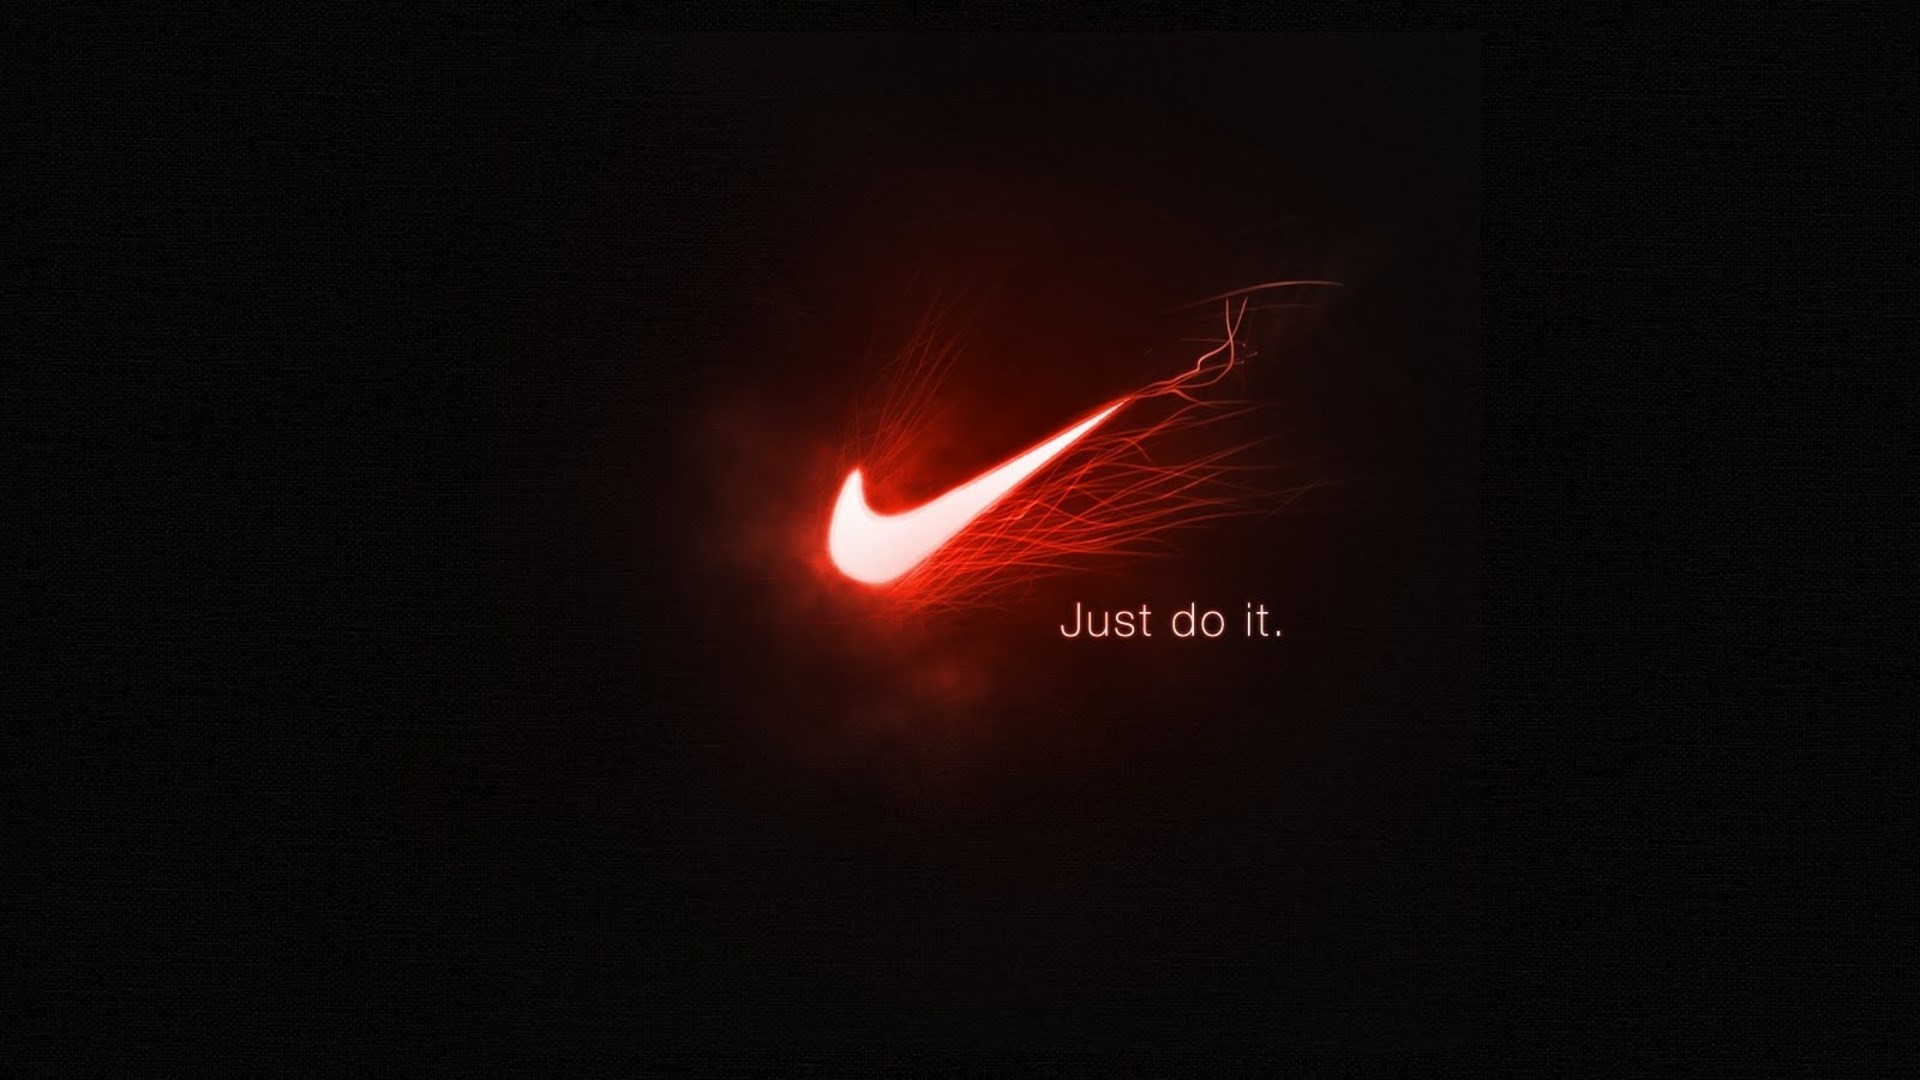 1920x1080 Nike logo wallpaper hd just do it